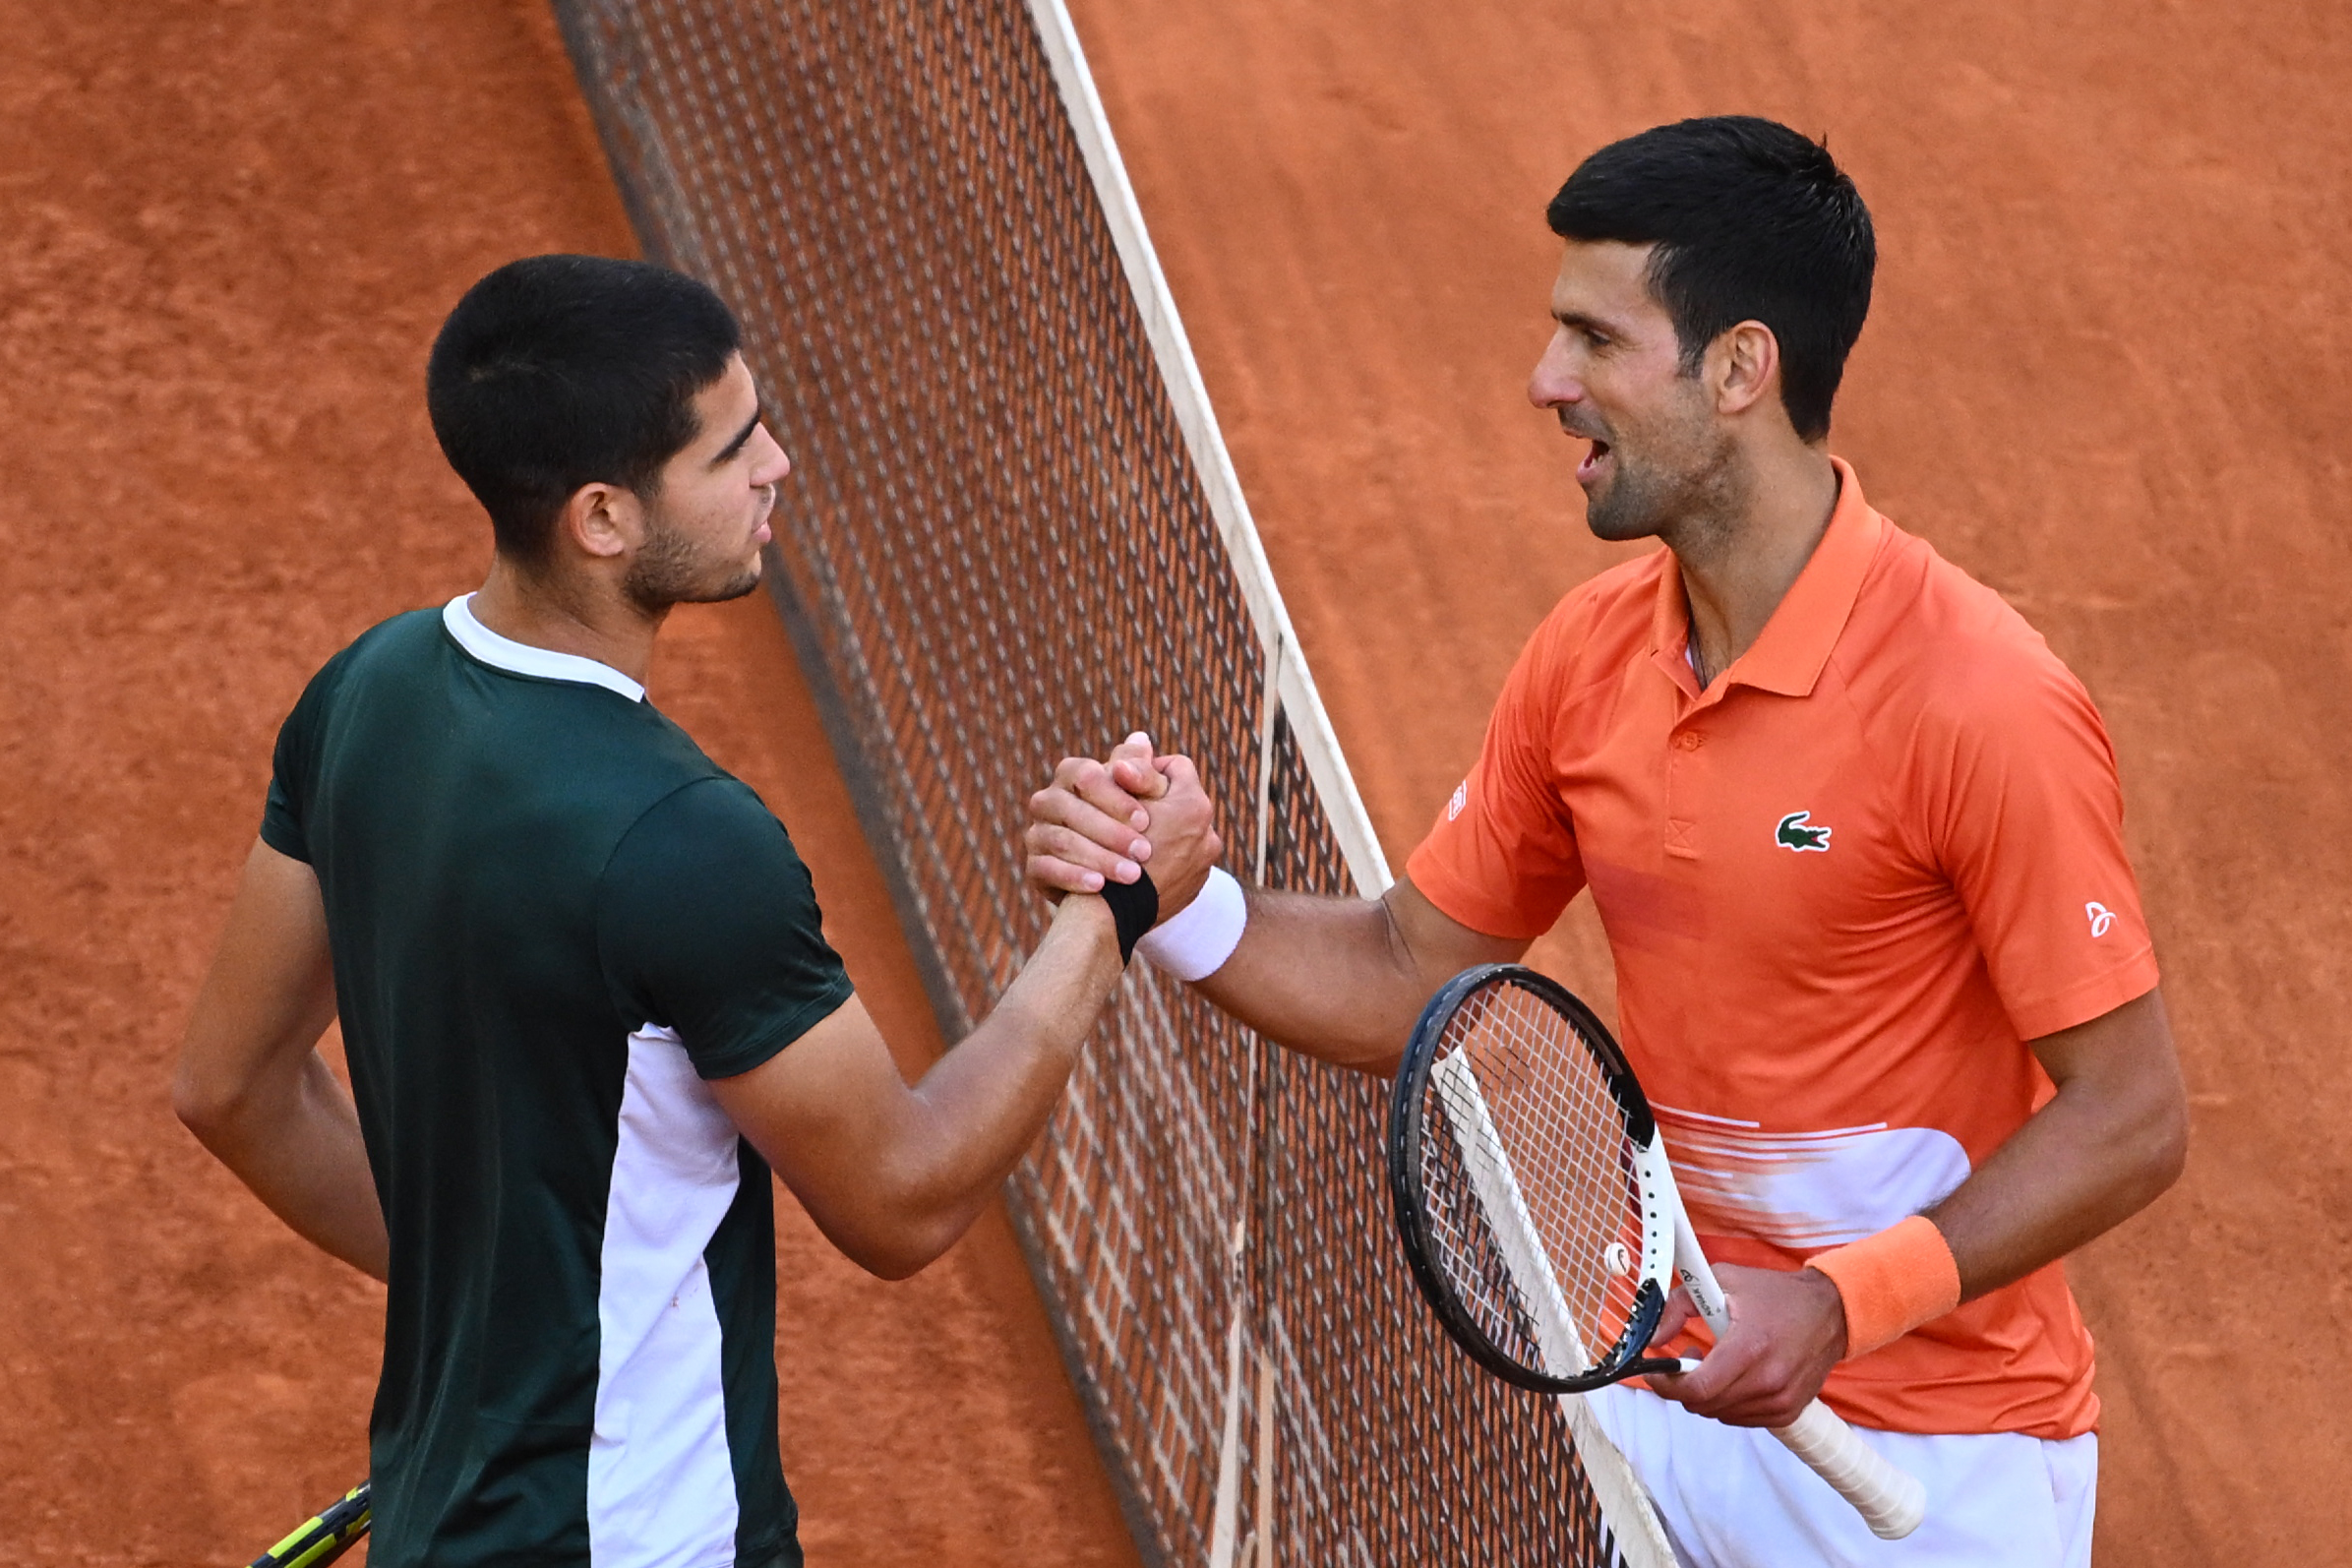 Alcaraz “mereció ganar”, afirmó Djokovic tras su derrota